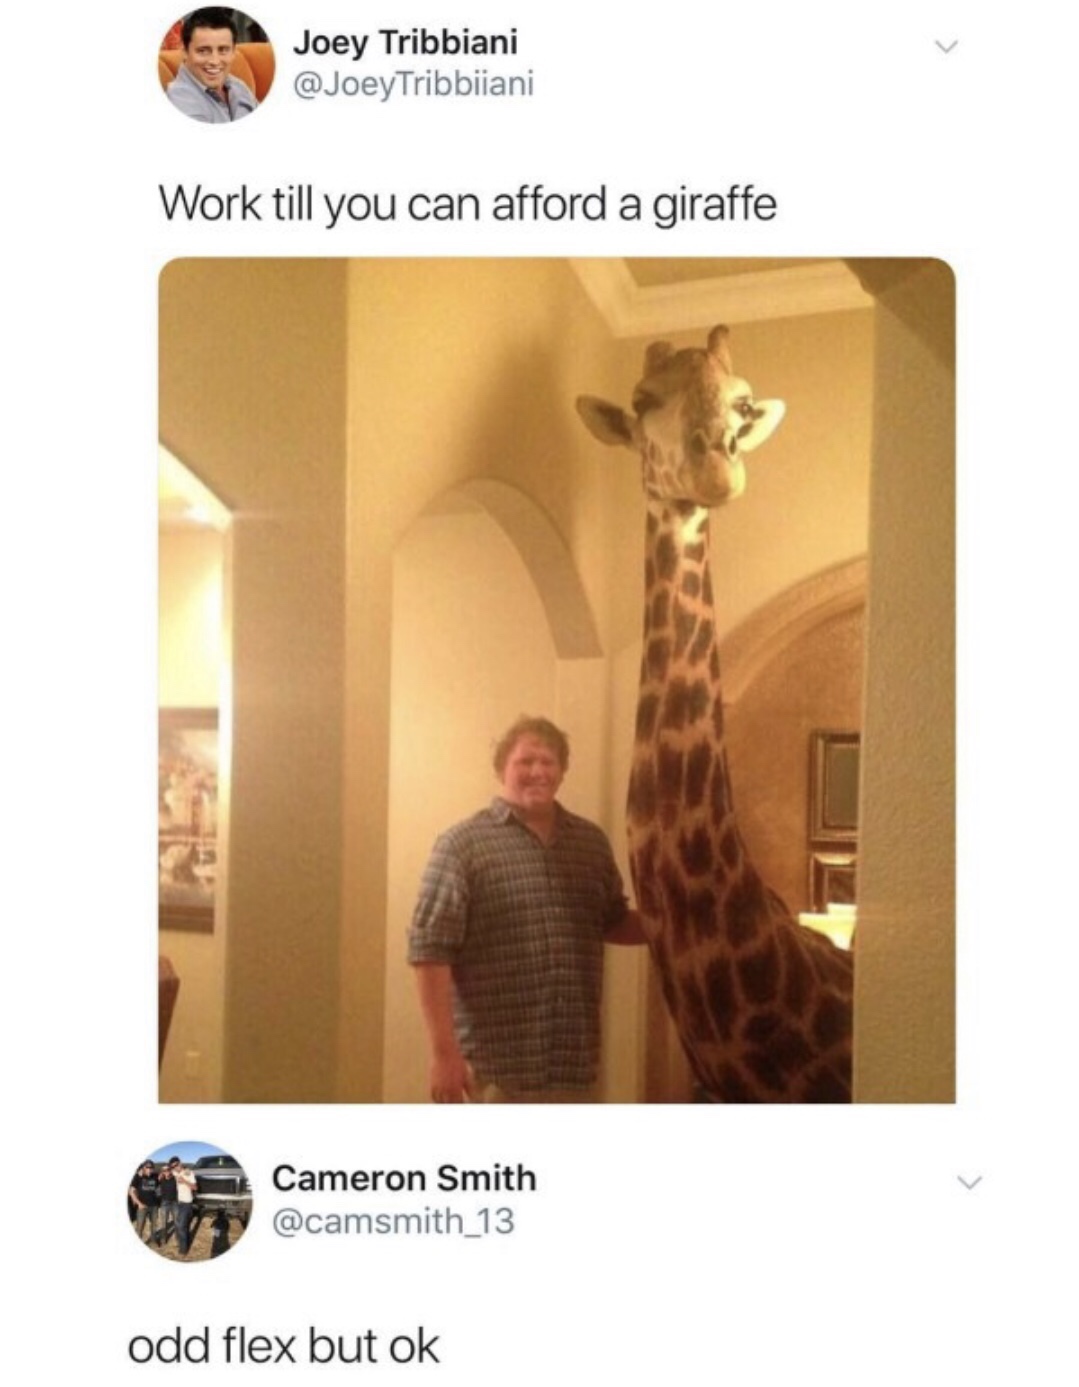 funny memes Joey from Friends meme of an odd flex but ok meme - Joey Tribbiani Tribbiiani Work till you can afford a giraffe Cameron Smith odd flex but ok